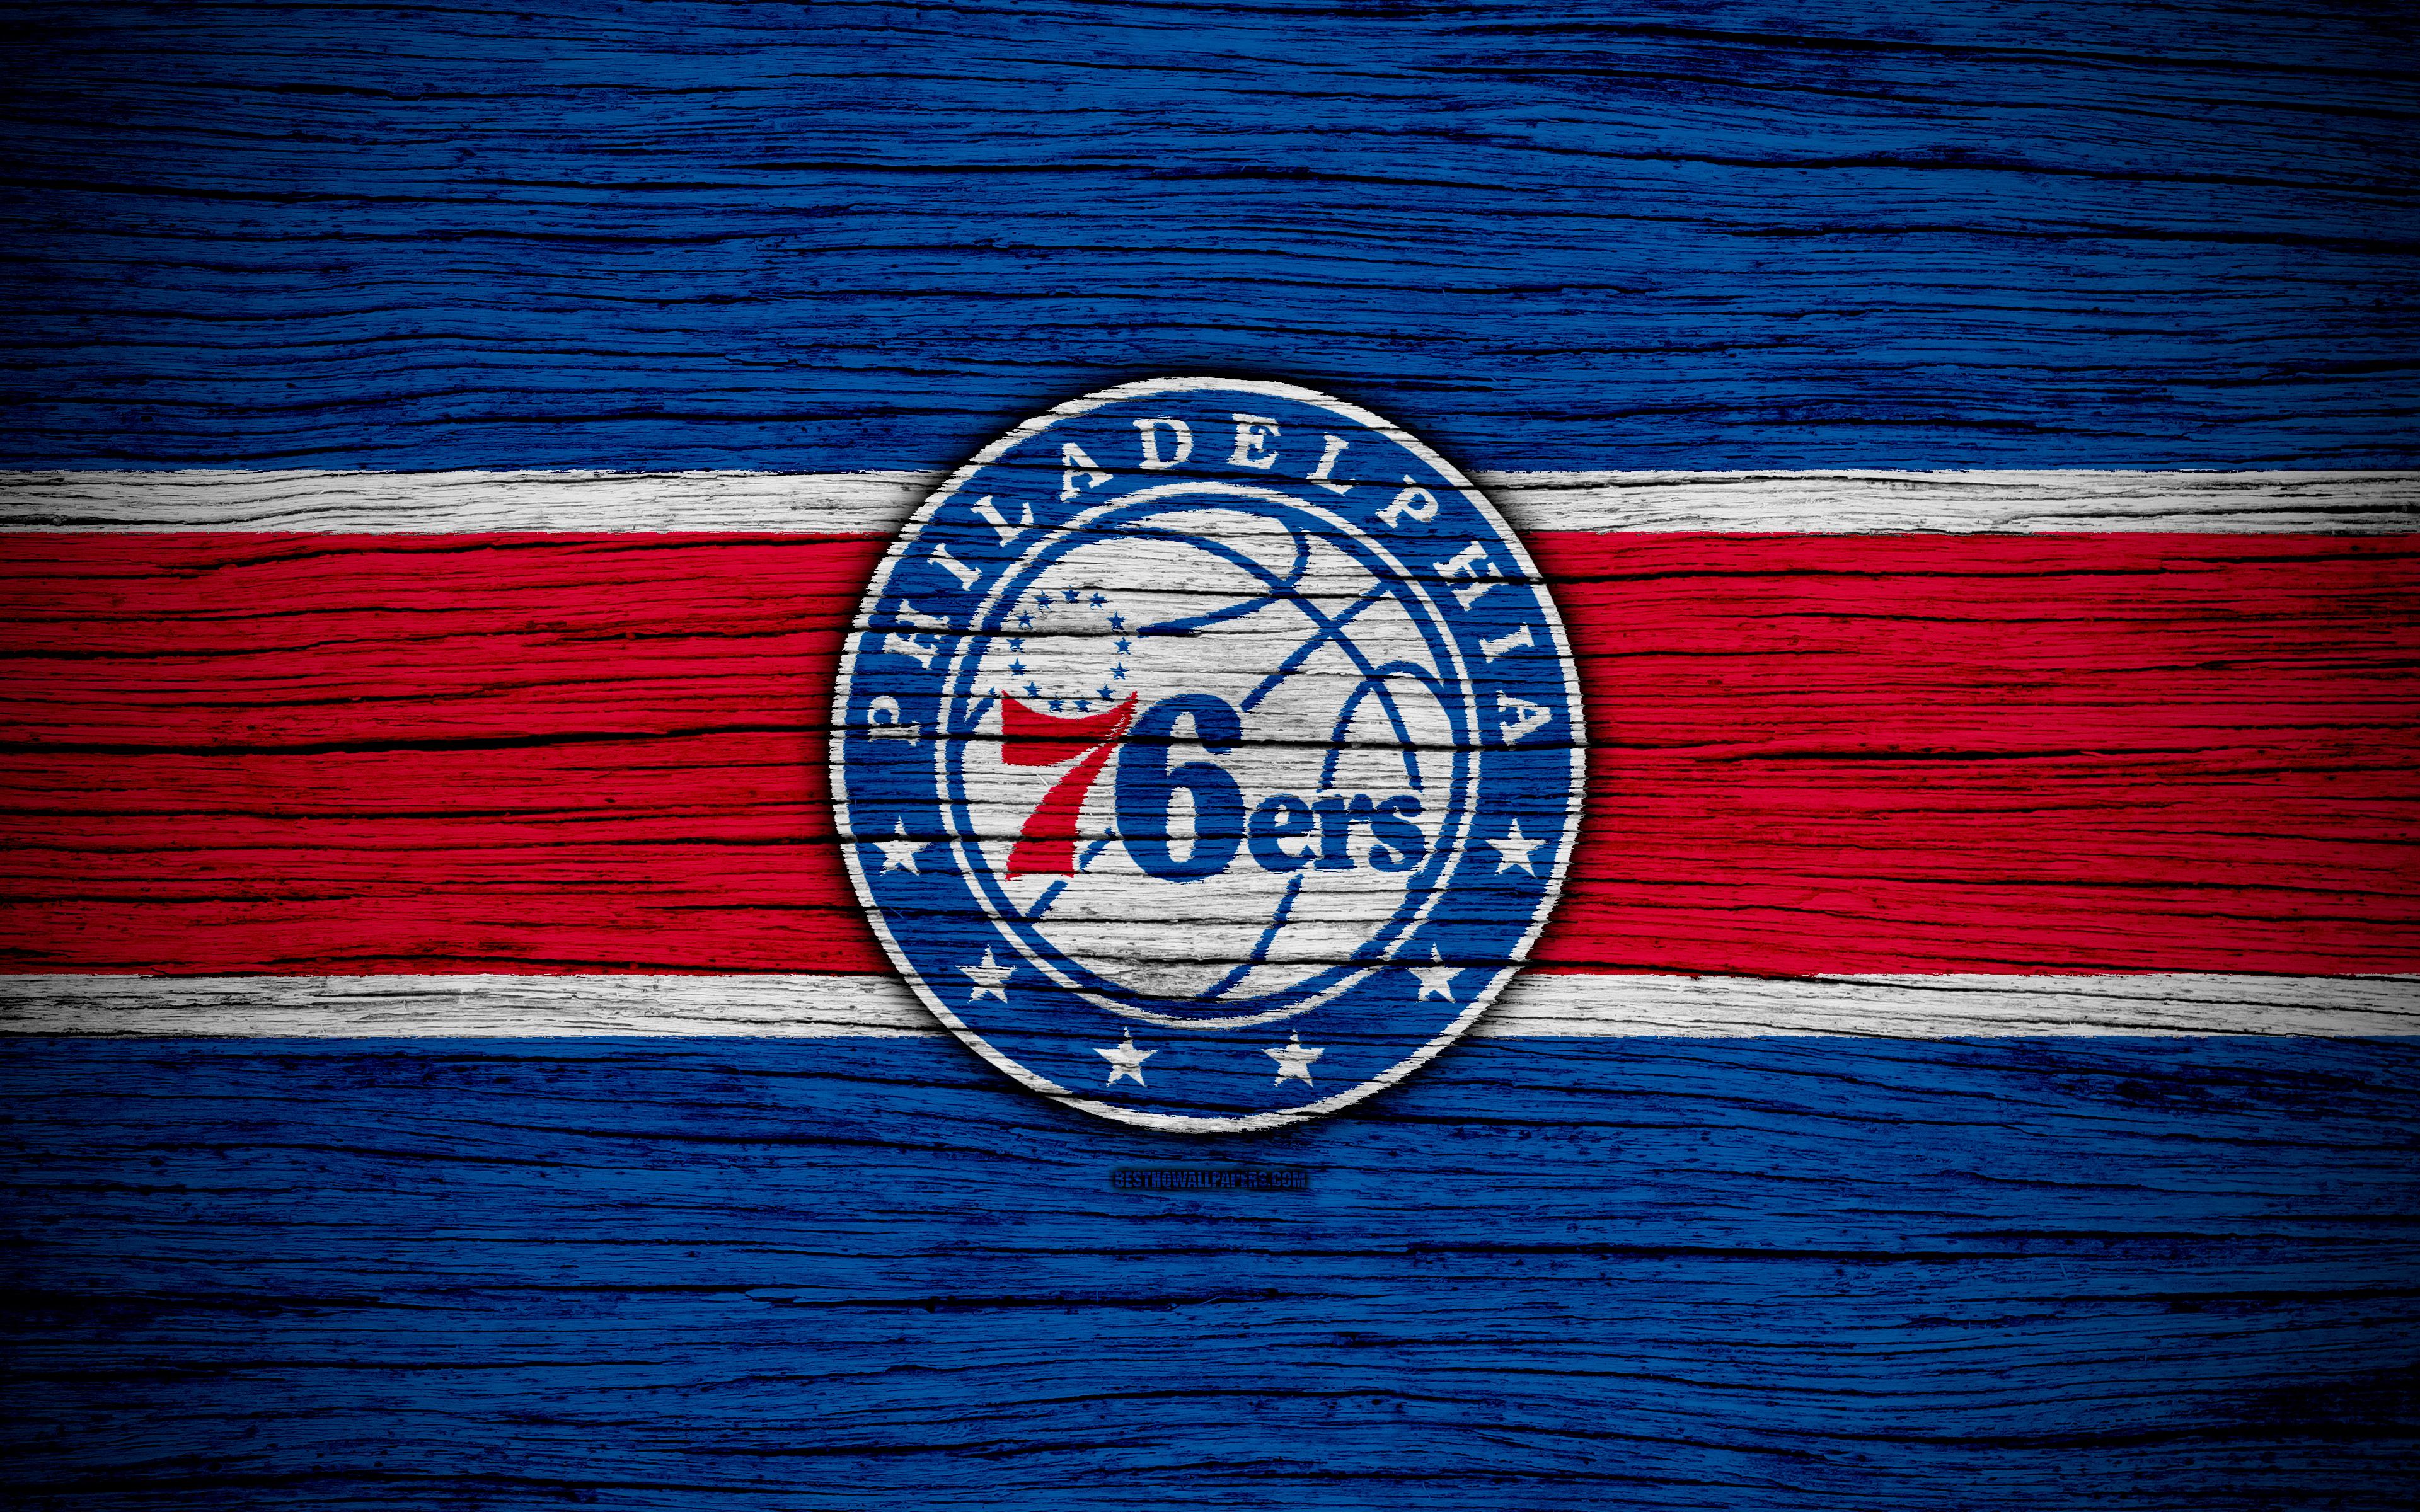 Download wallpapers Philadelphia 76ers flag 4k blue and red 3D waves  NBA american basketball team Philadelphia 76ers logo basketball Philadelphia  76ers for desktop free Pictures for desktop free